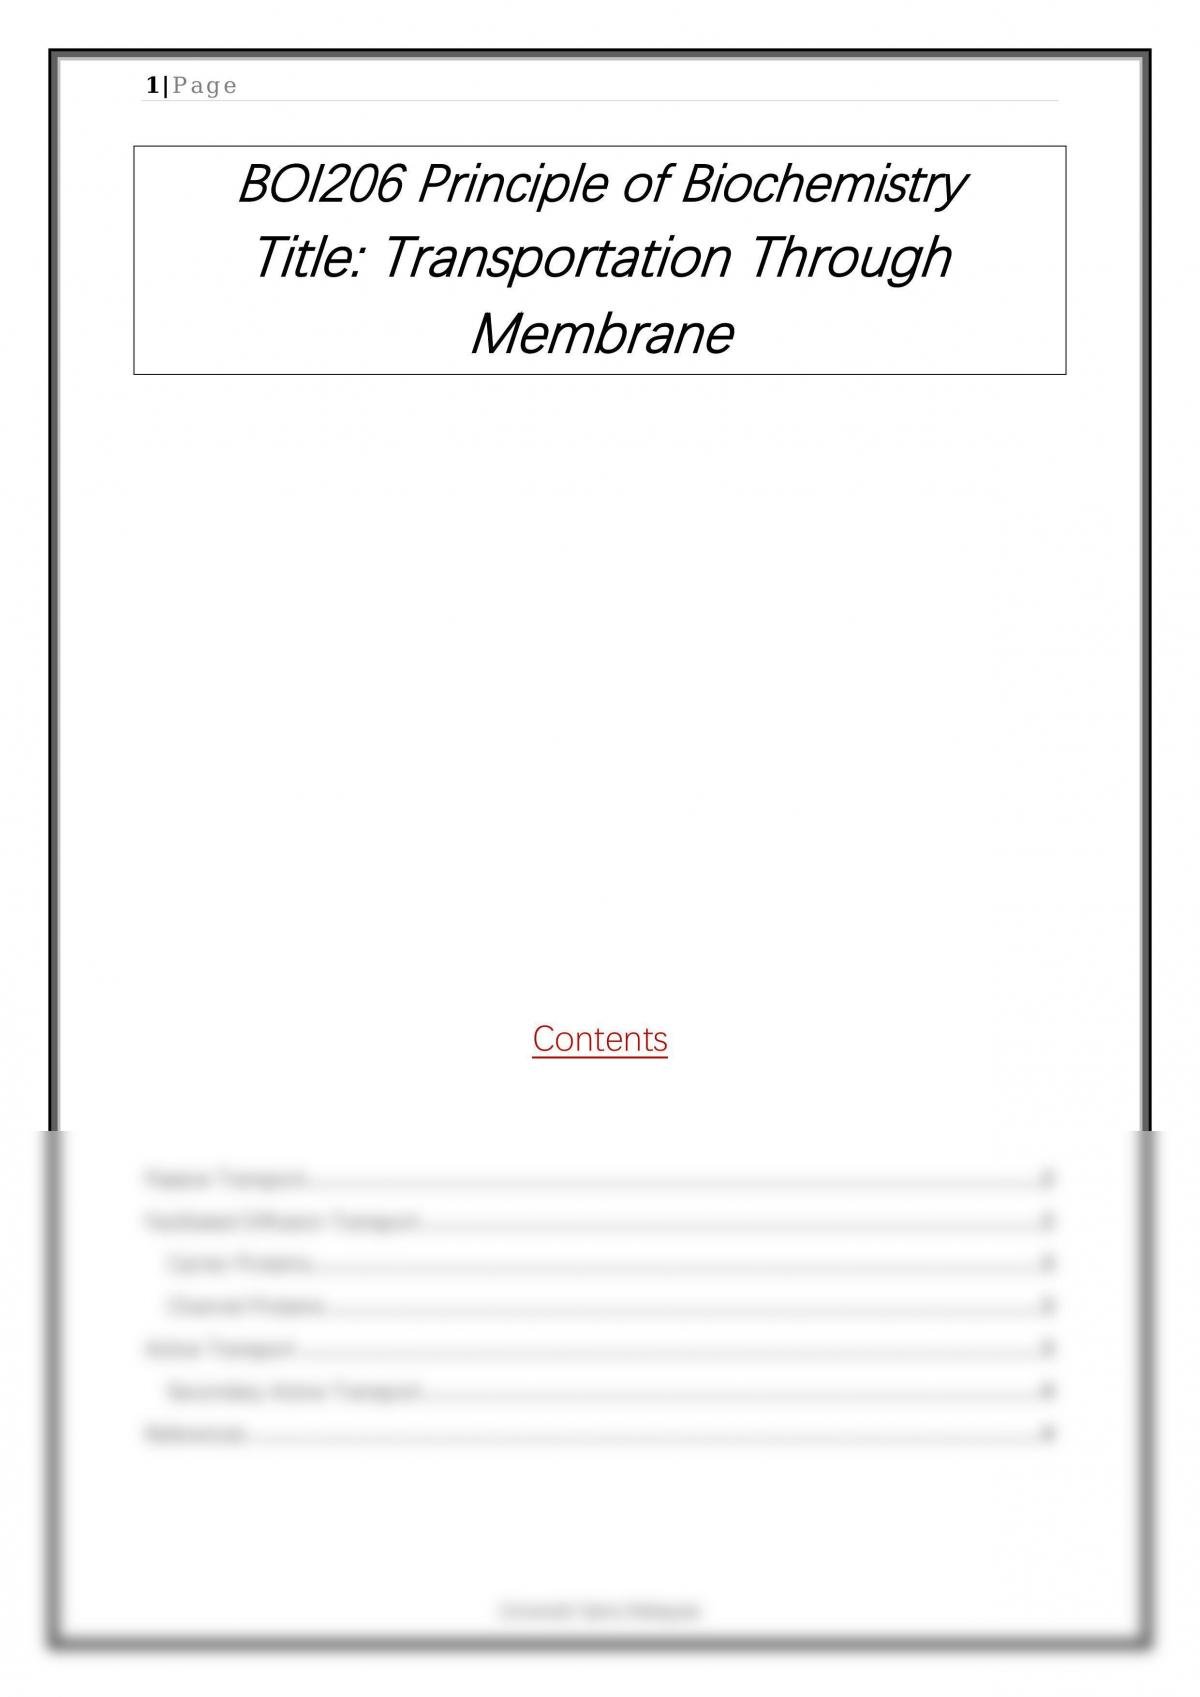 Transportation Through Membrane - Page 1